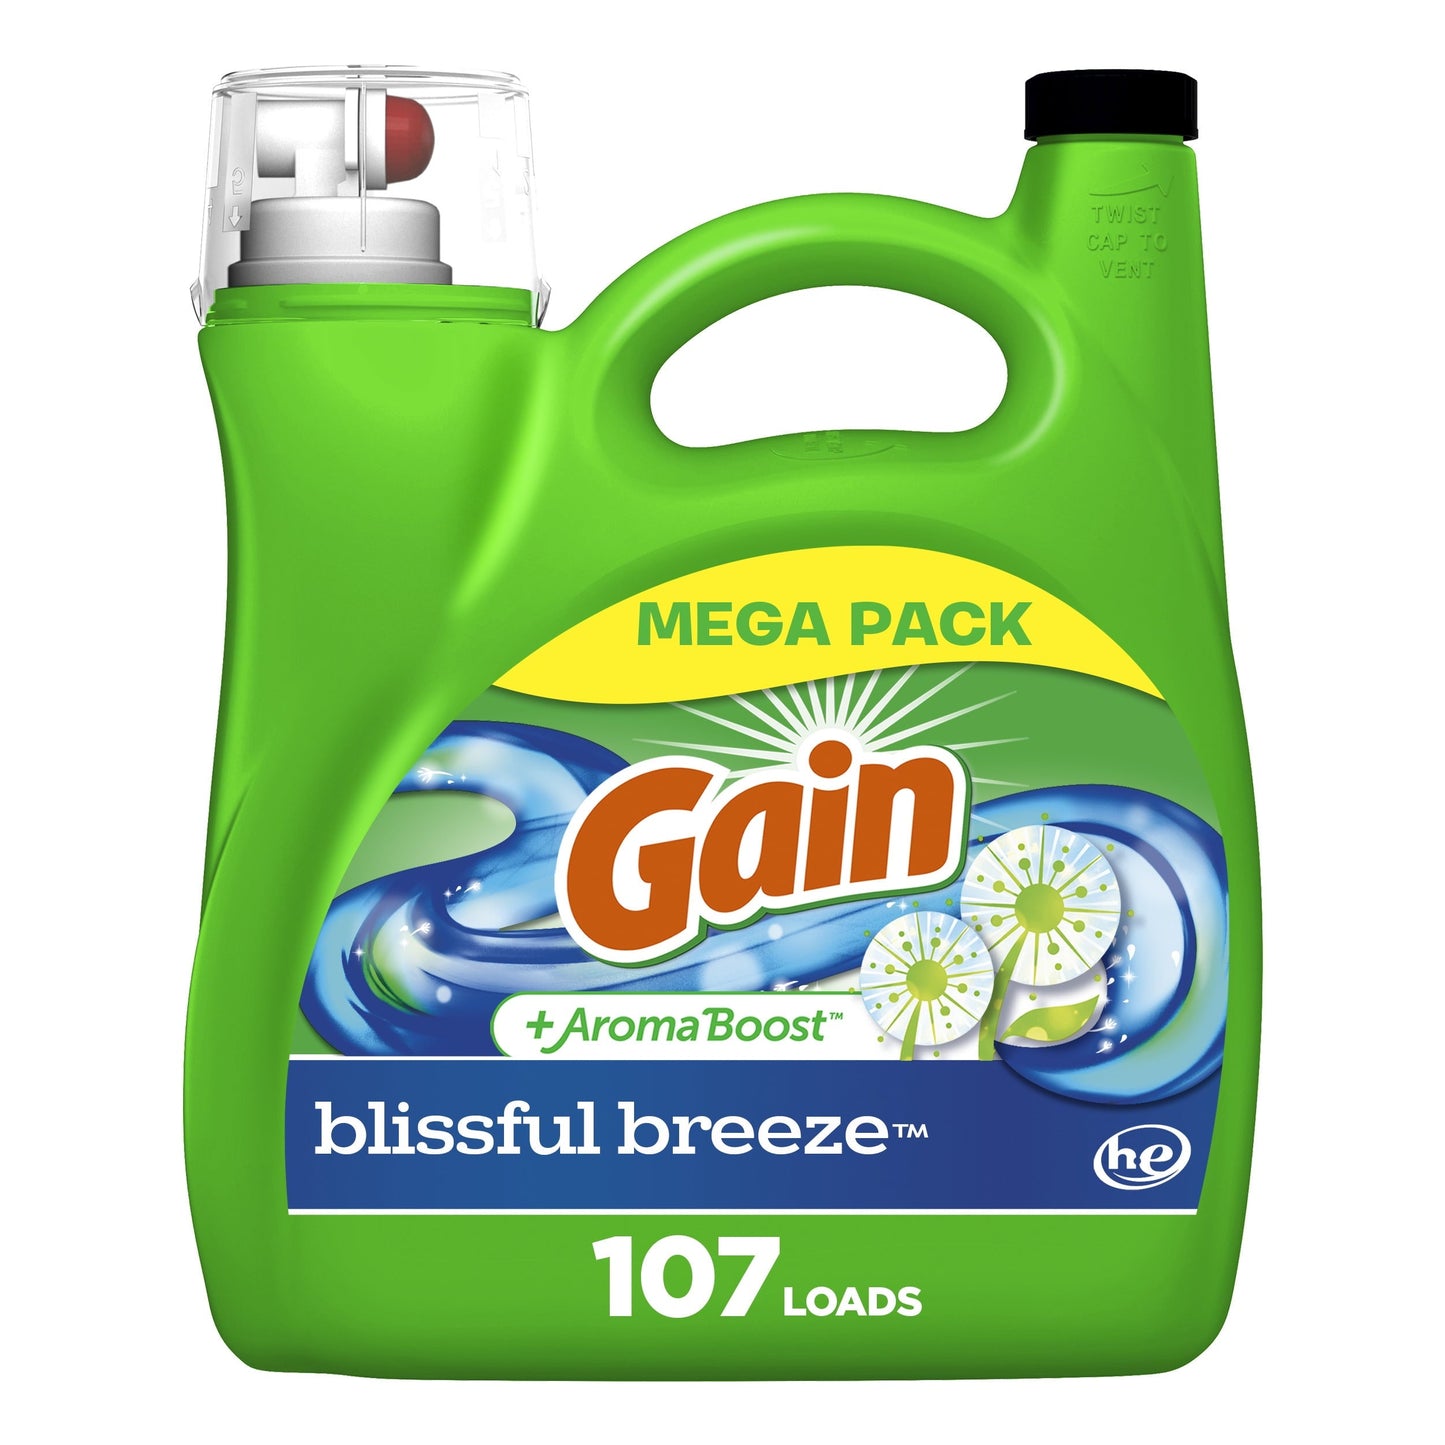 Gain + Aroma Boost Liquid Laundry Detergent, Blissful Breeze Scent, 107 Loads, 154 fl oz, HE Compatible